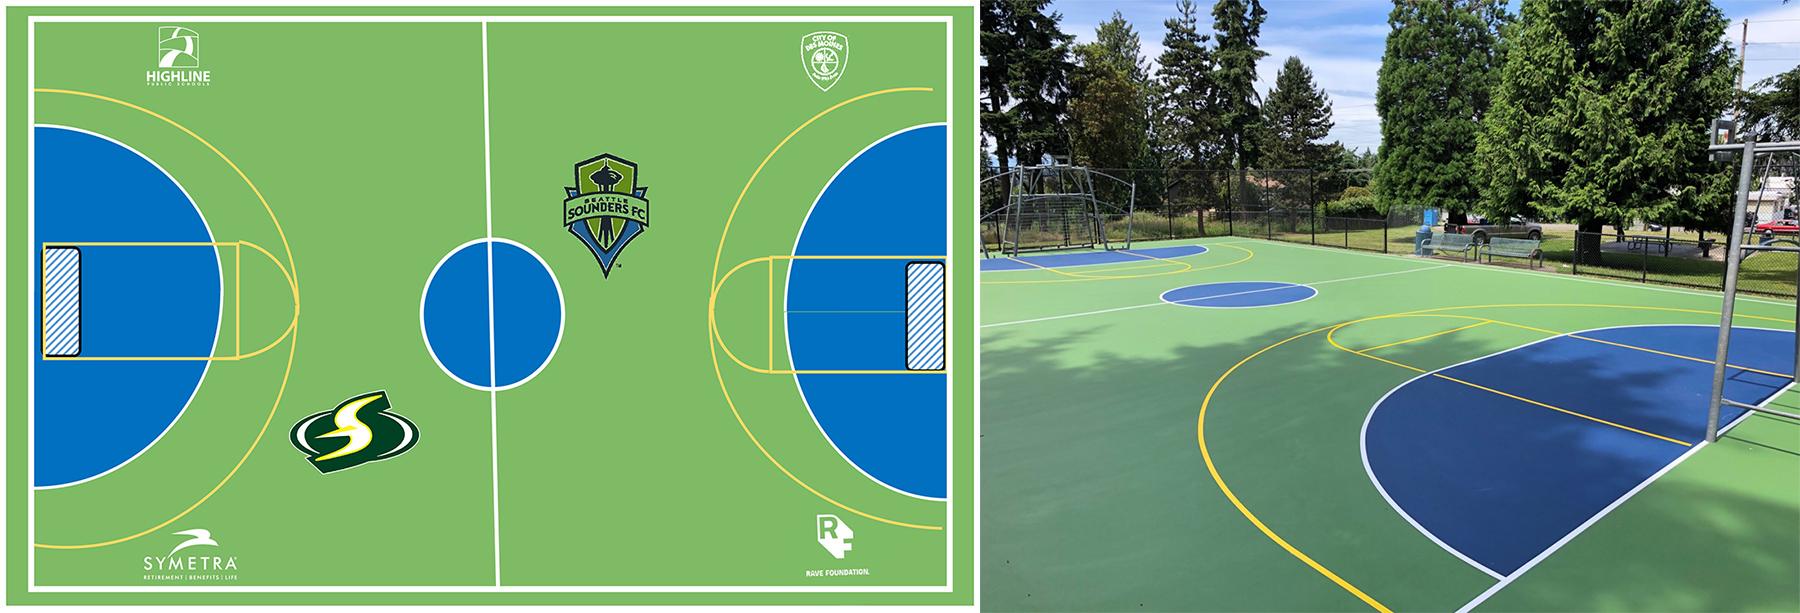 Basketball court | Soccer pitch